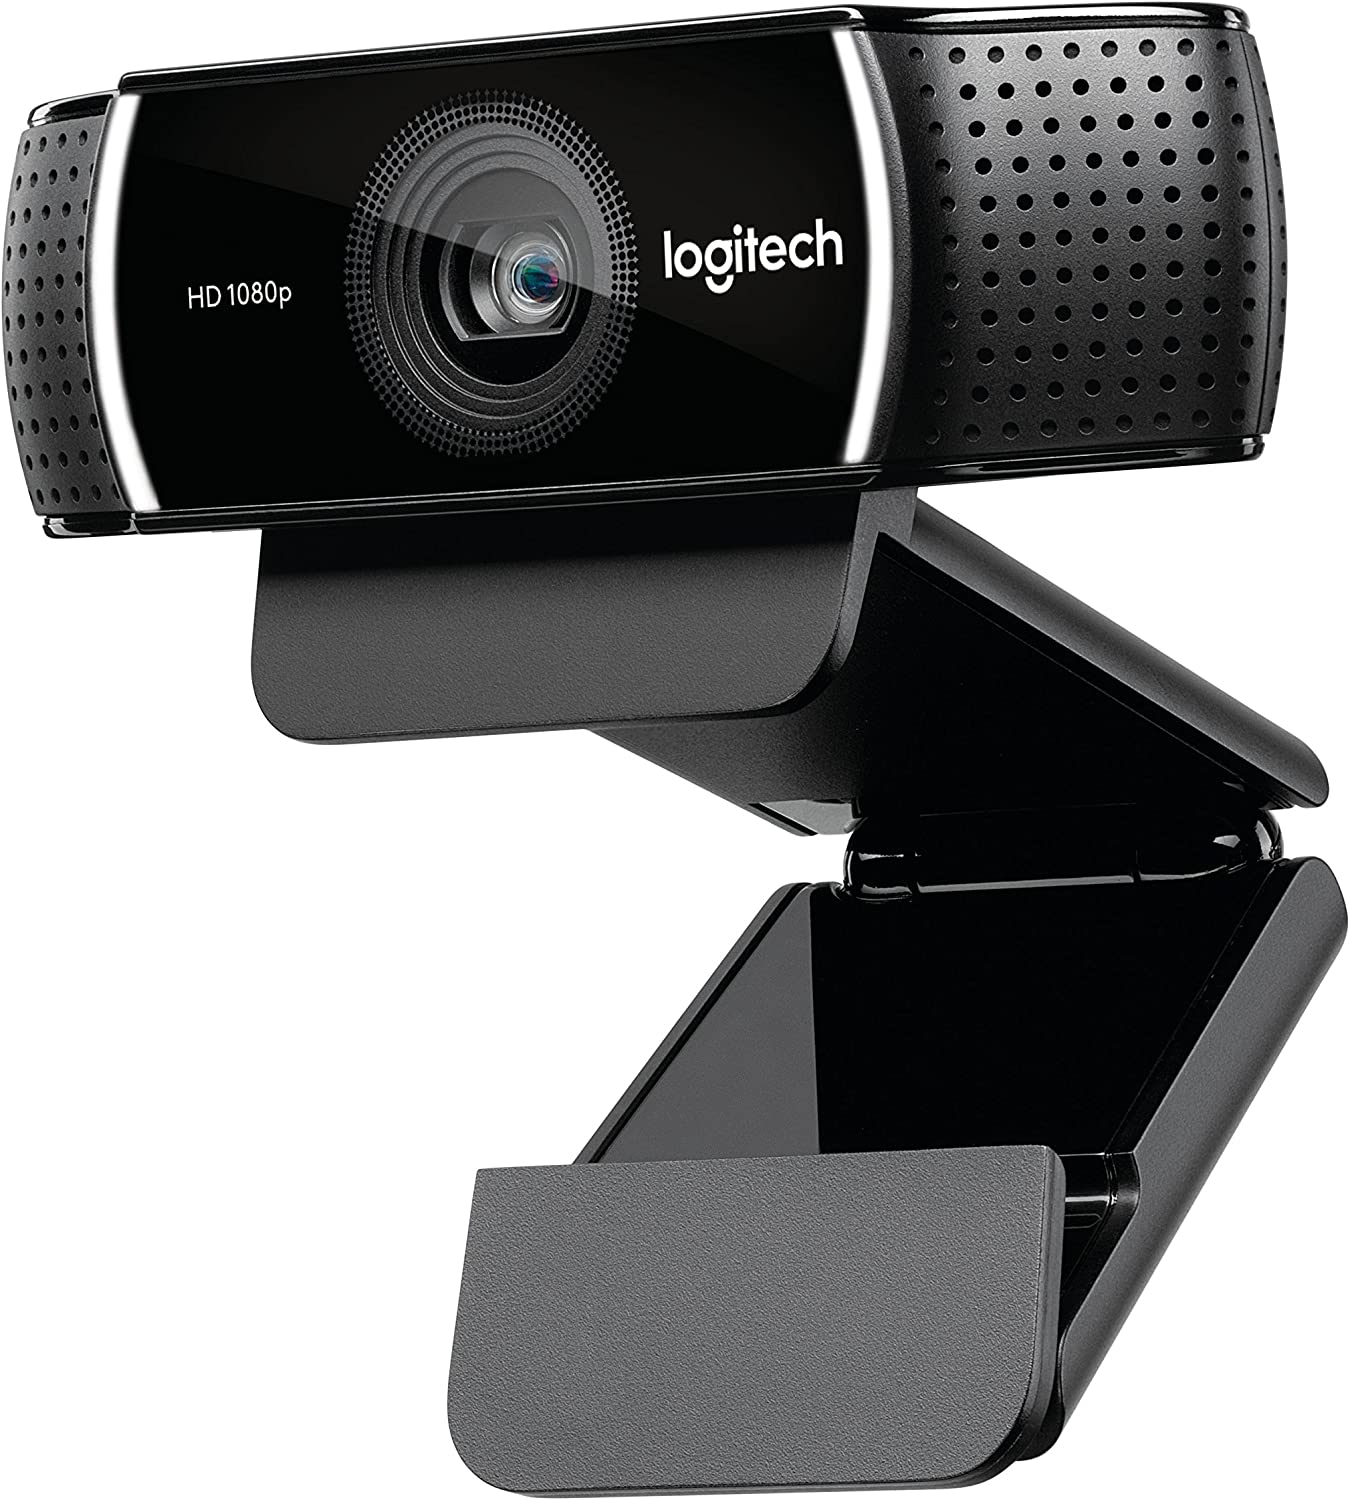 Logitech C922 Pro Stream Webcam 1080P HD Video Streaming and Recording Camera